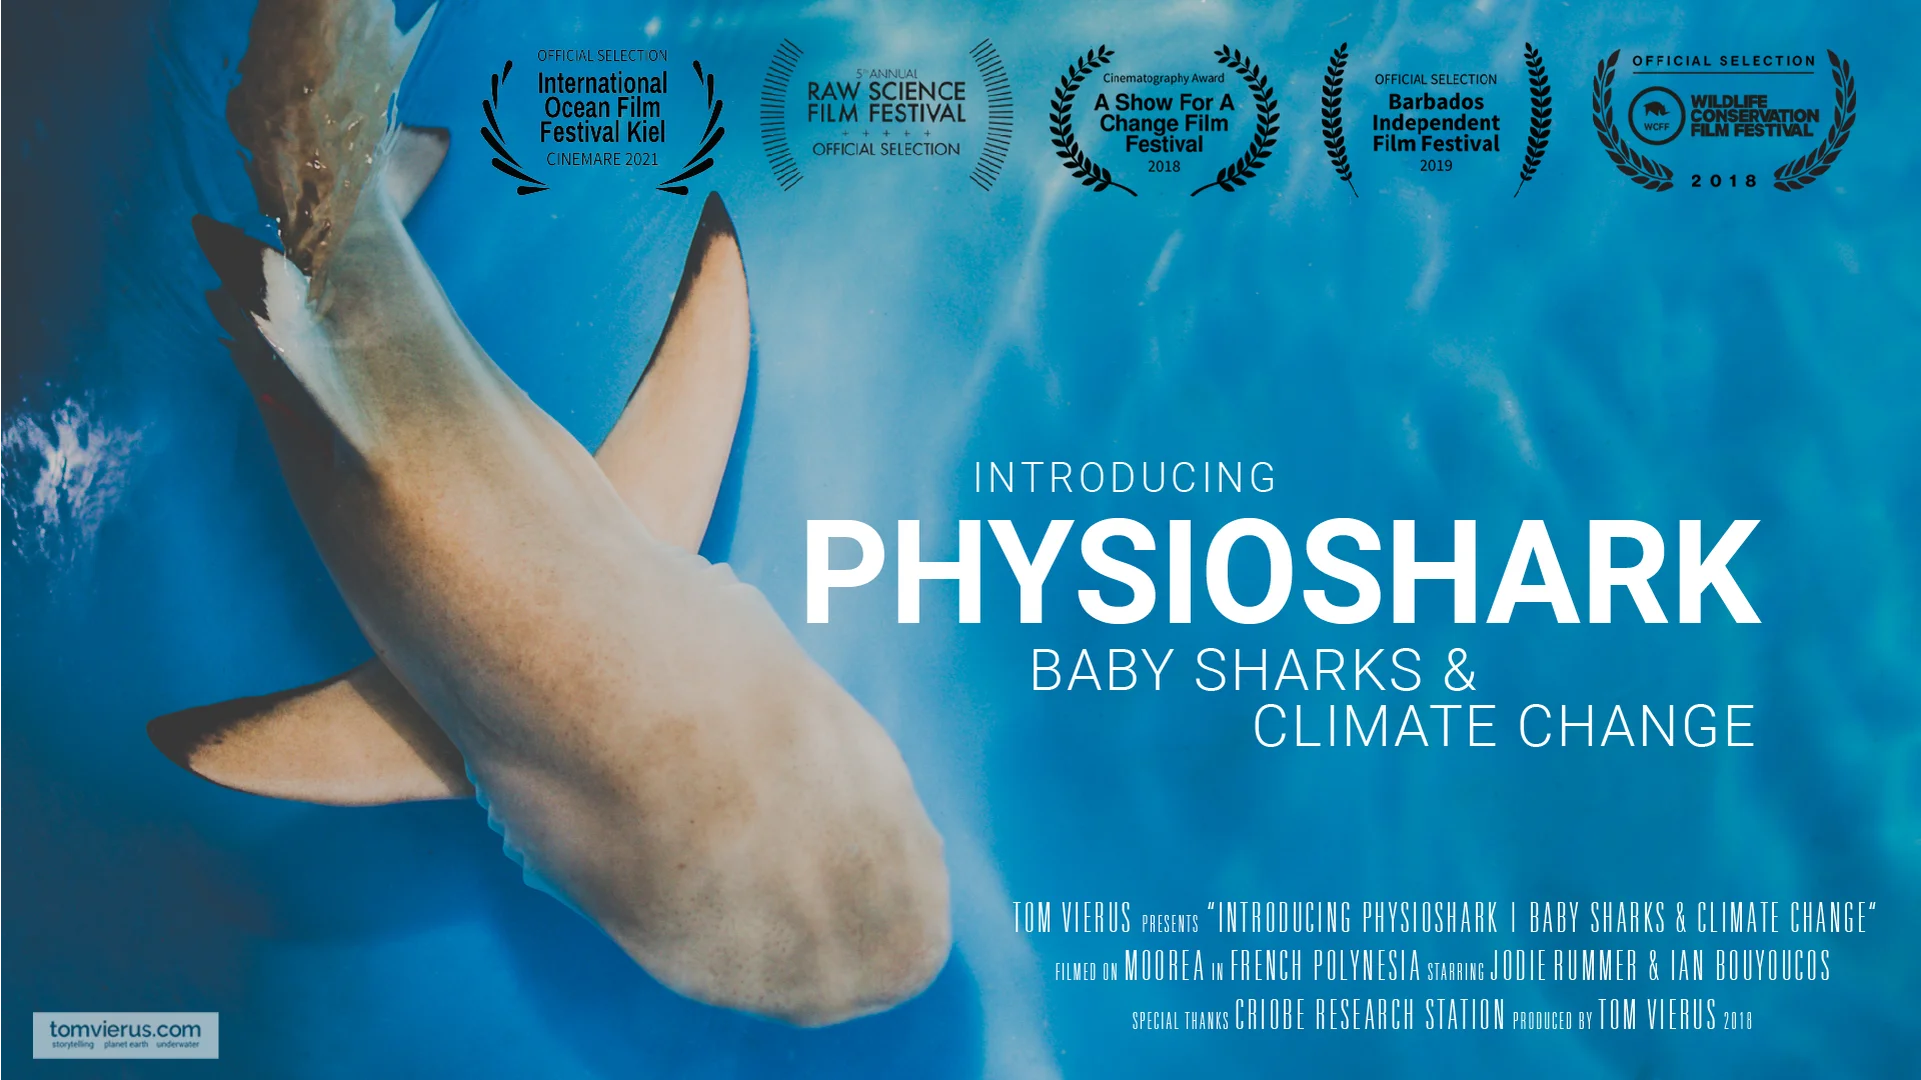 Introducing PHYSIOSHARK  Baby sharks & climate change on Vimeo